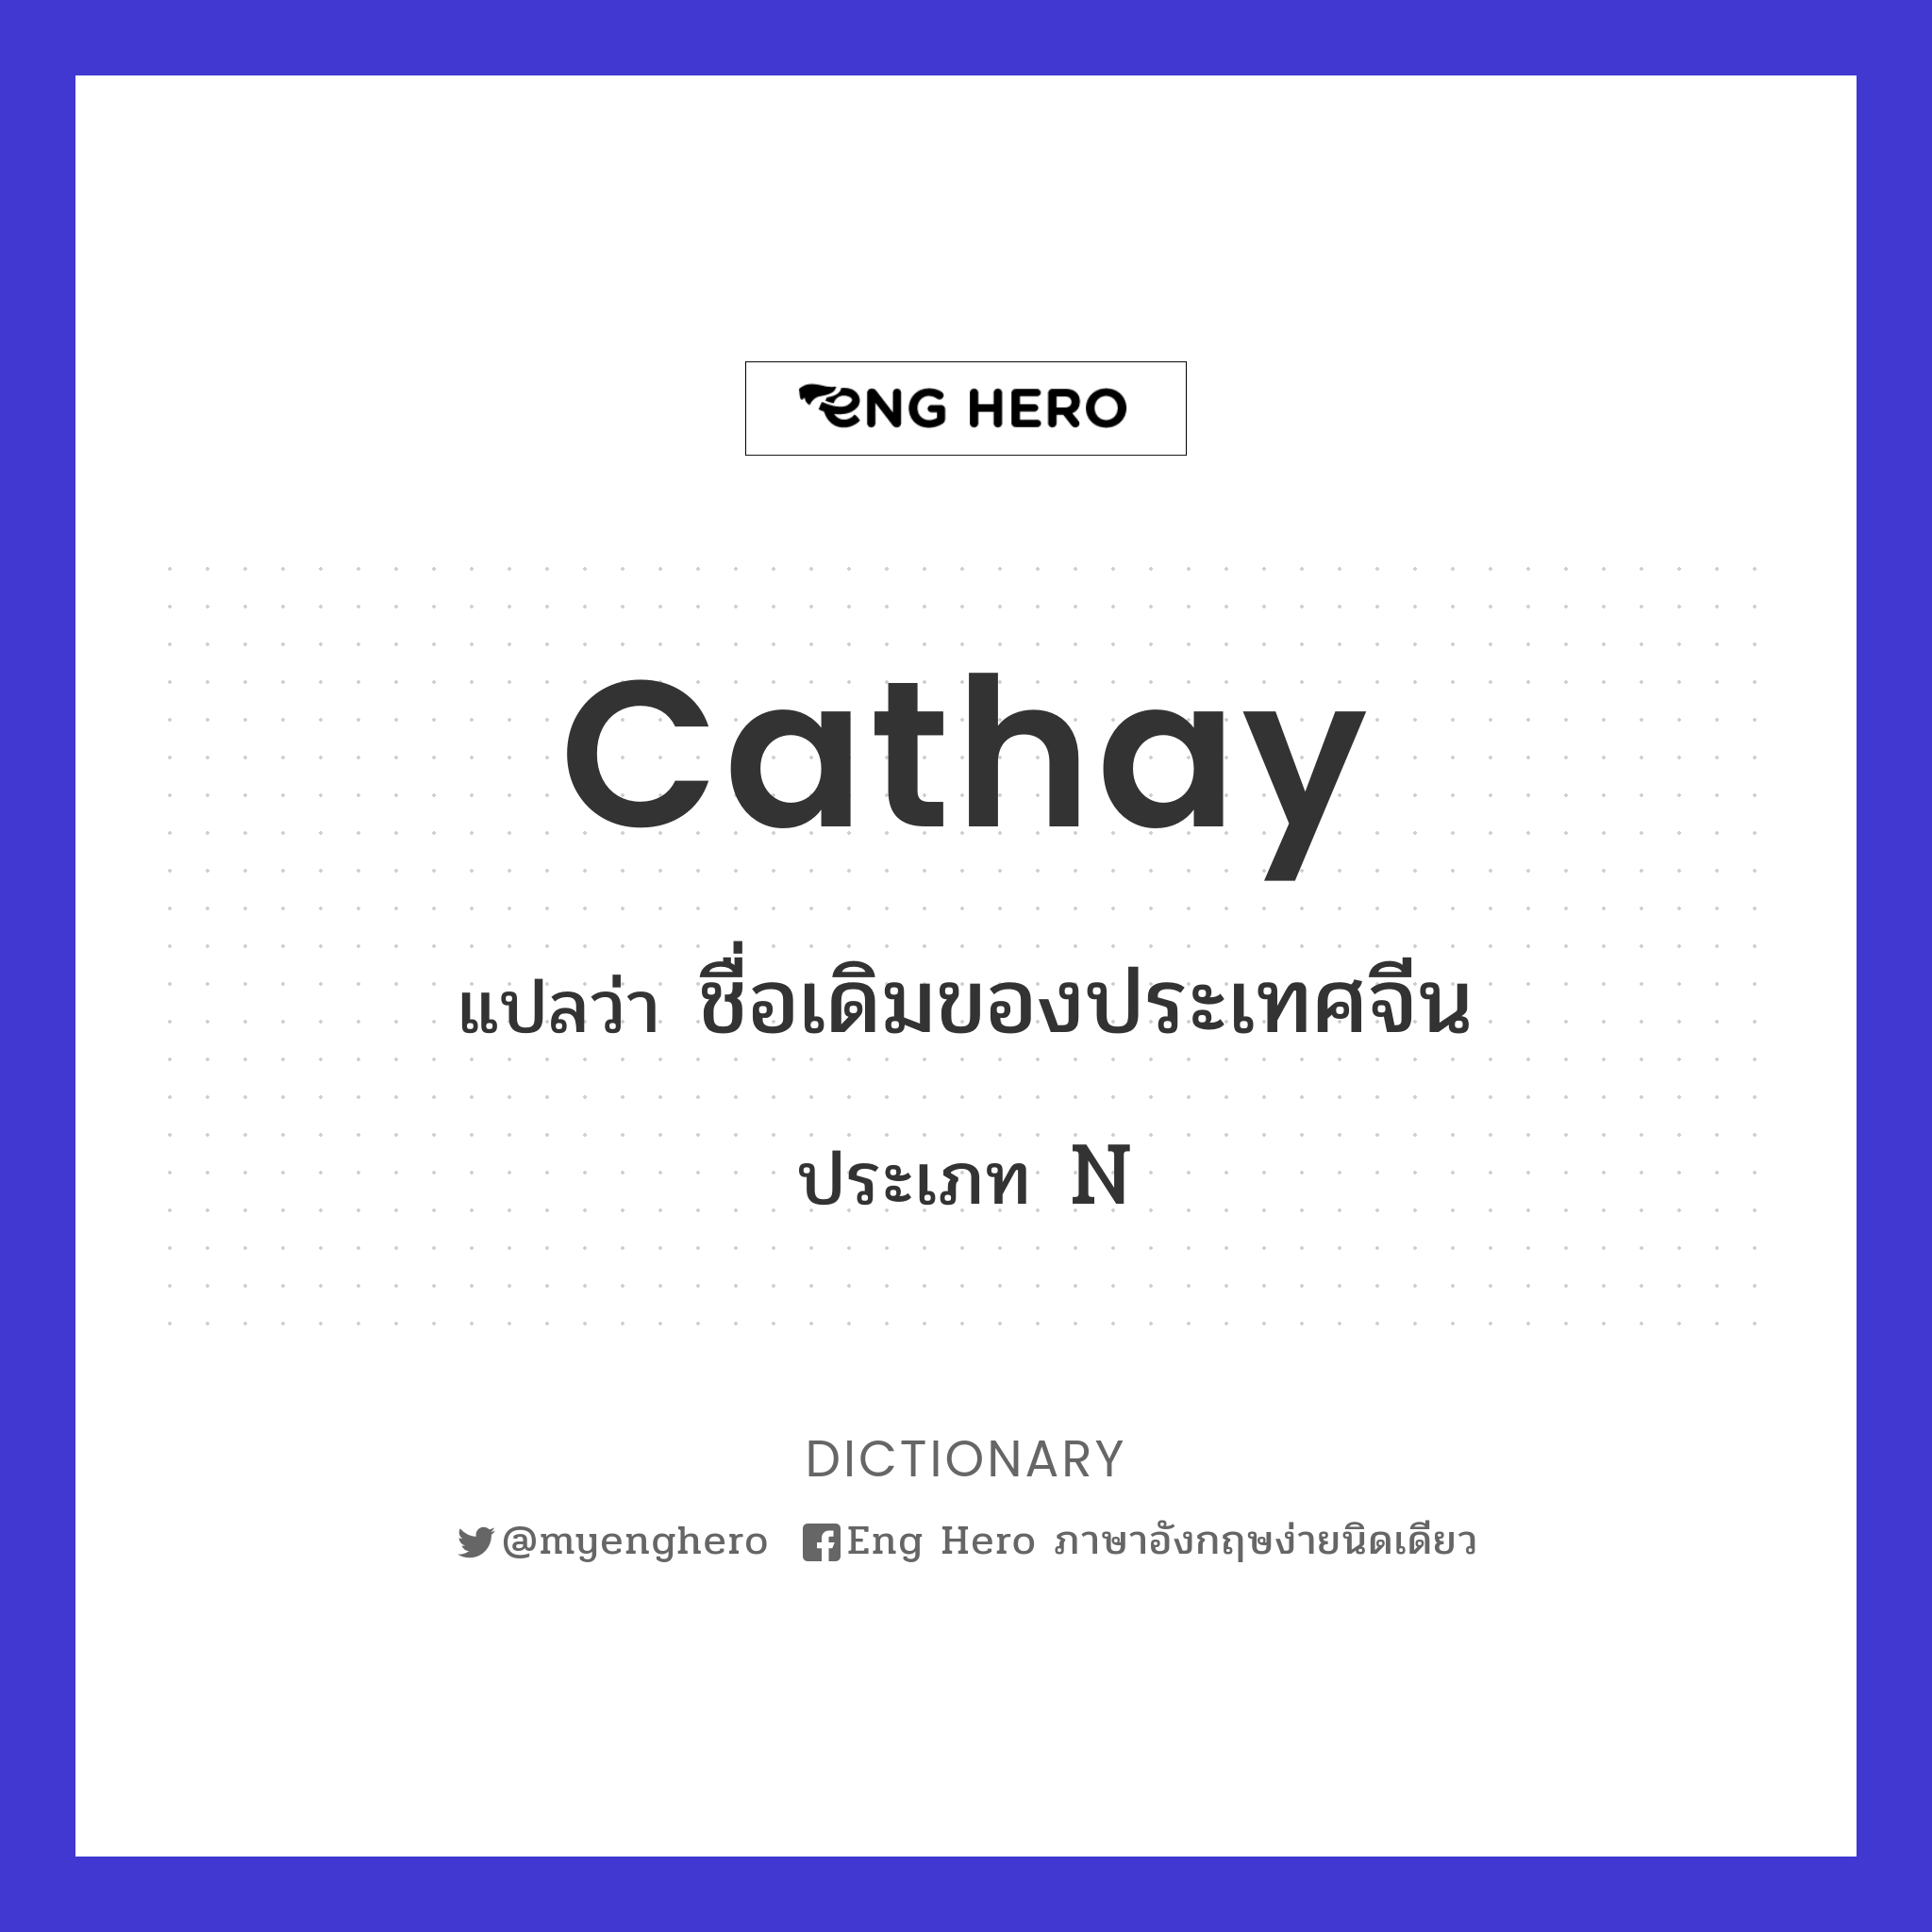 Cathay